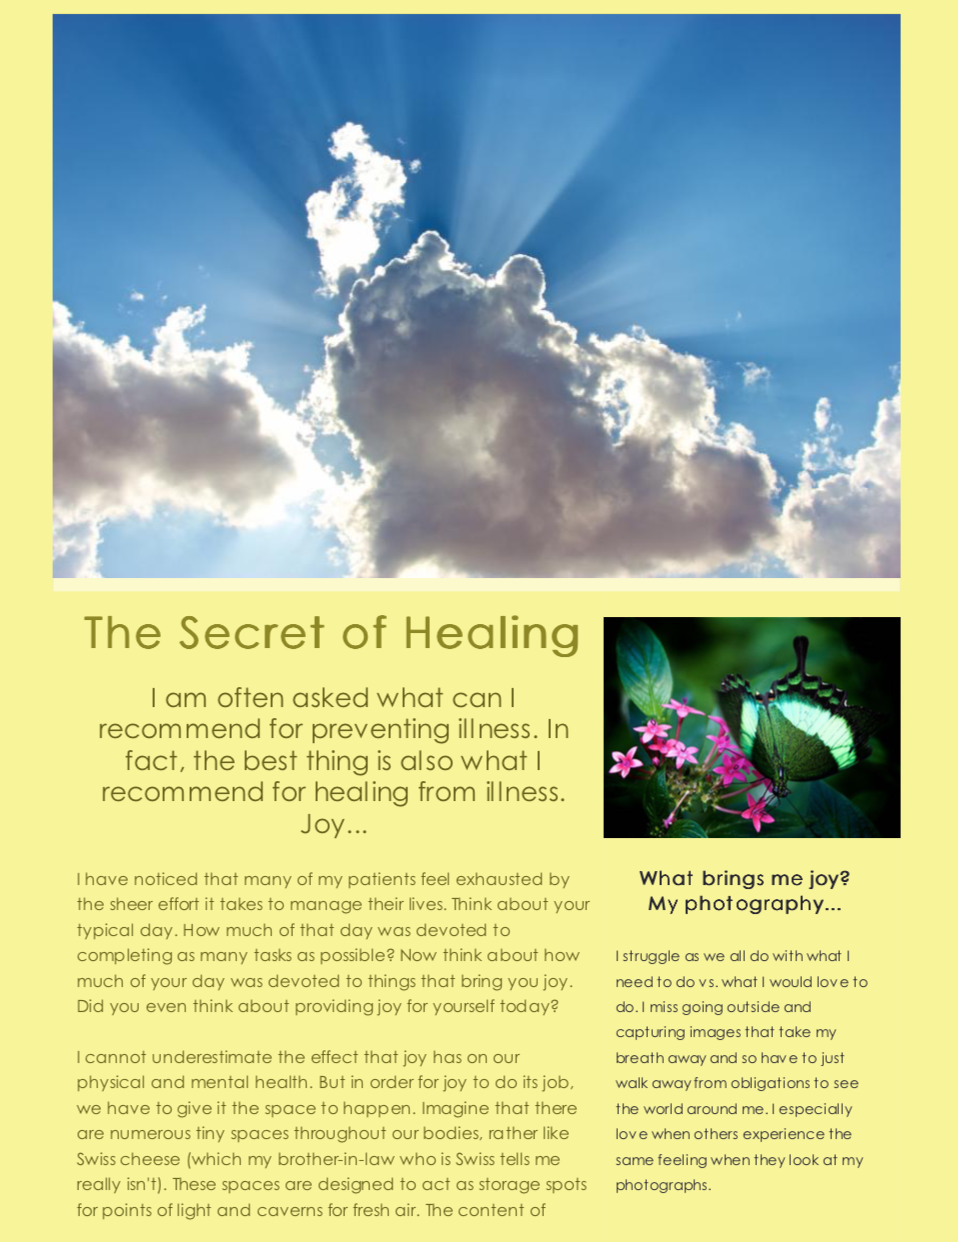 The Secret of Healing 2019